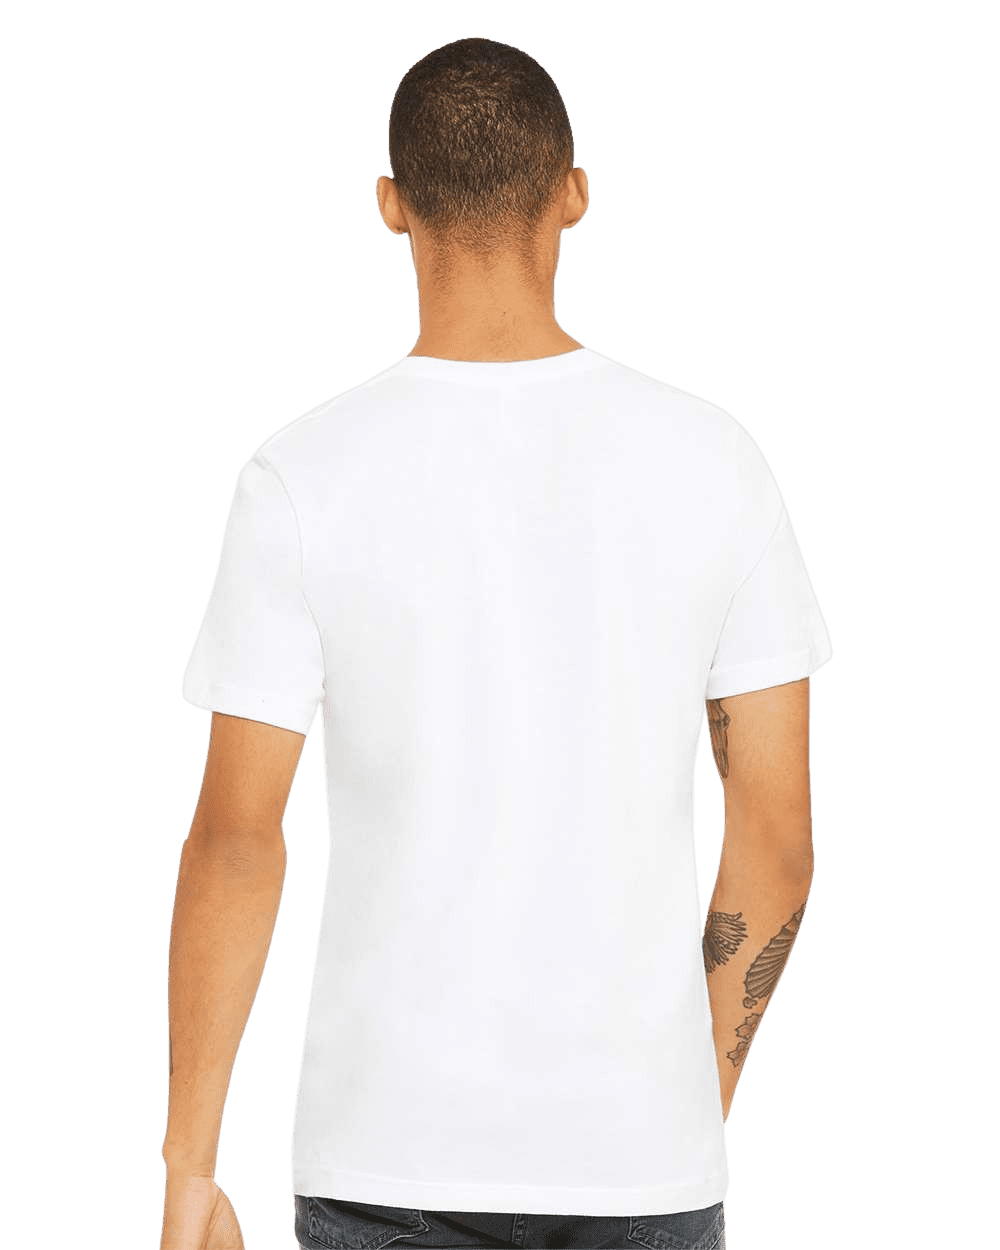 kiMaran Professional Fishing Tournament Logo Art T-Shirt Unisex Short  Sleeve Tee (White XL)